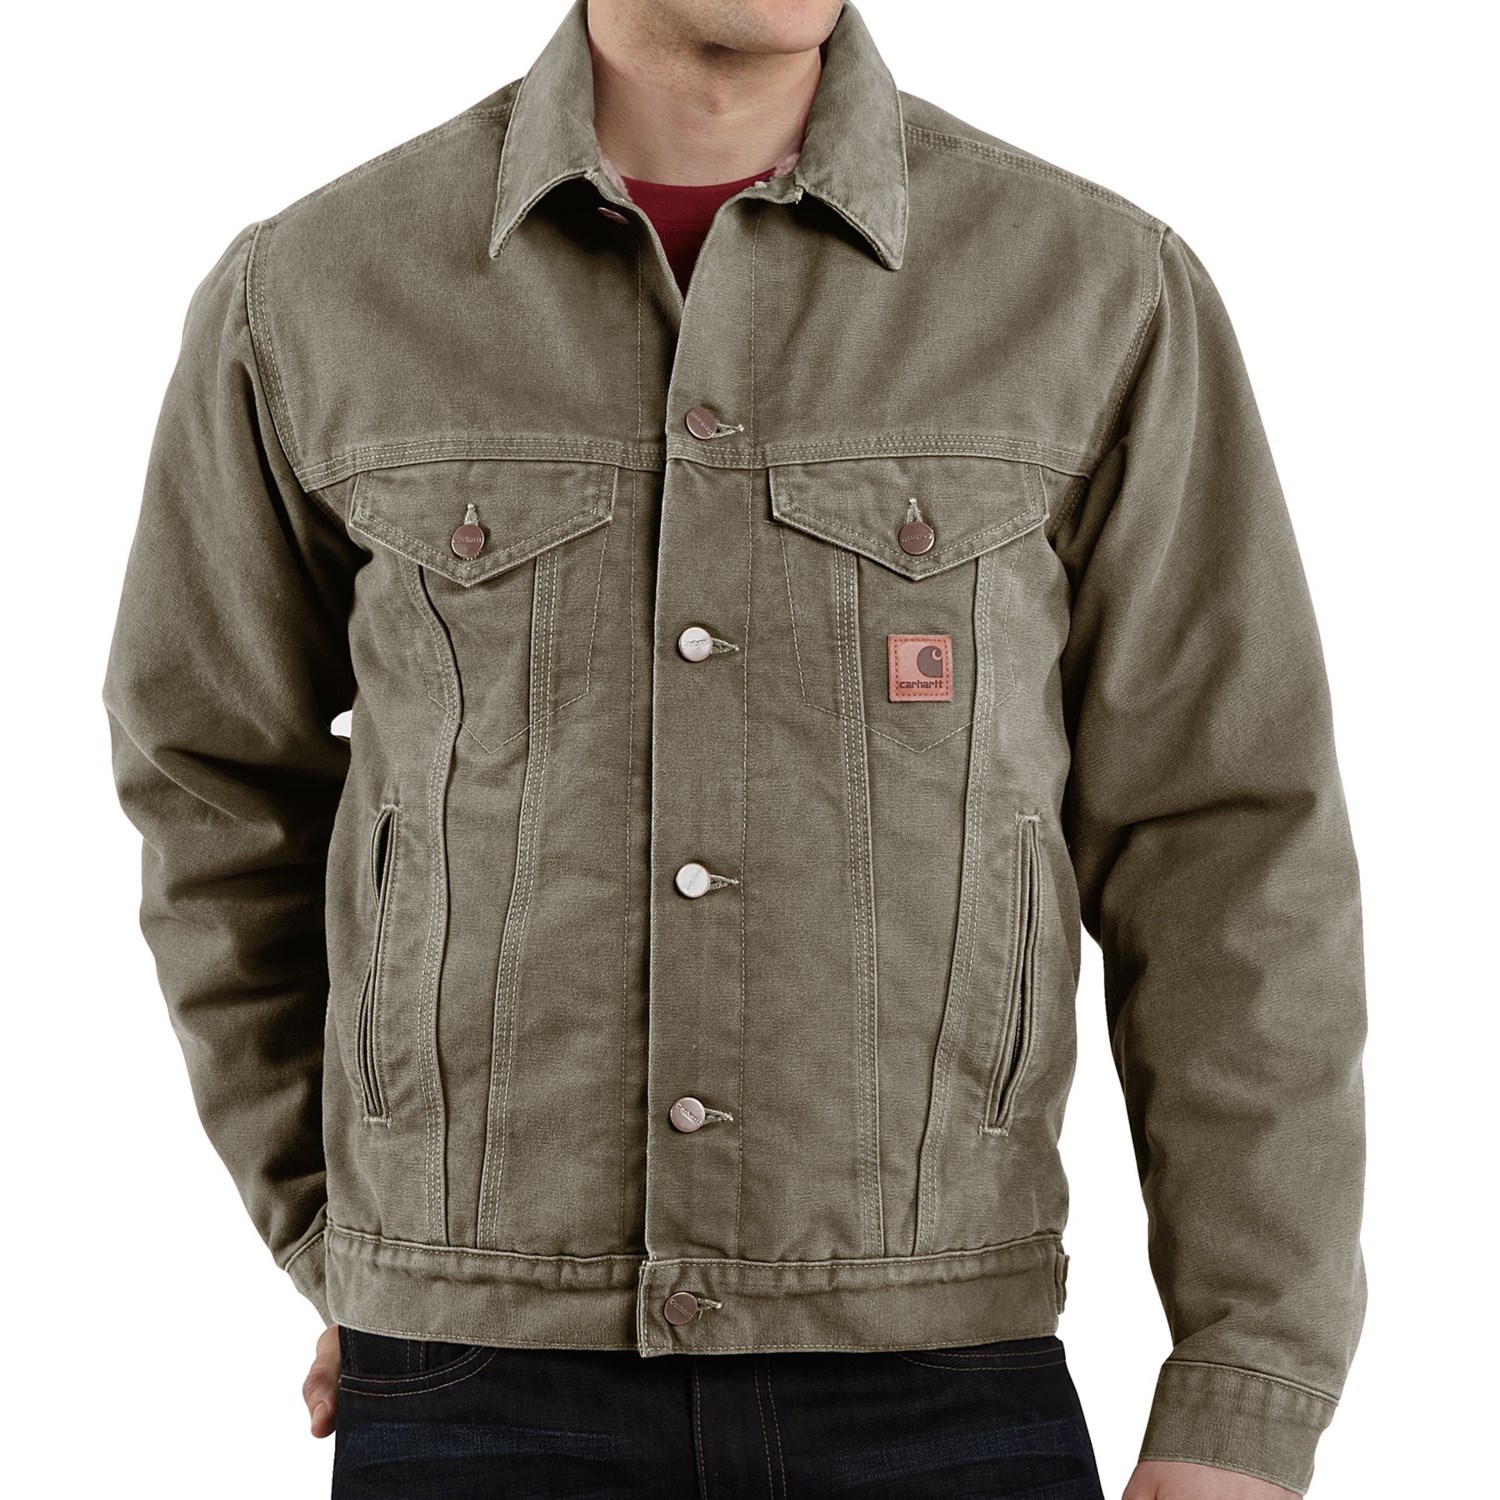 Carhartt Sandstone Jean Jacket (For Tall Men) 6142G